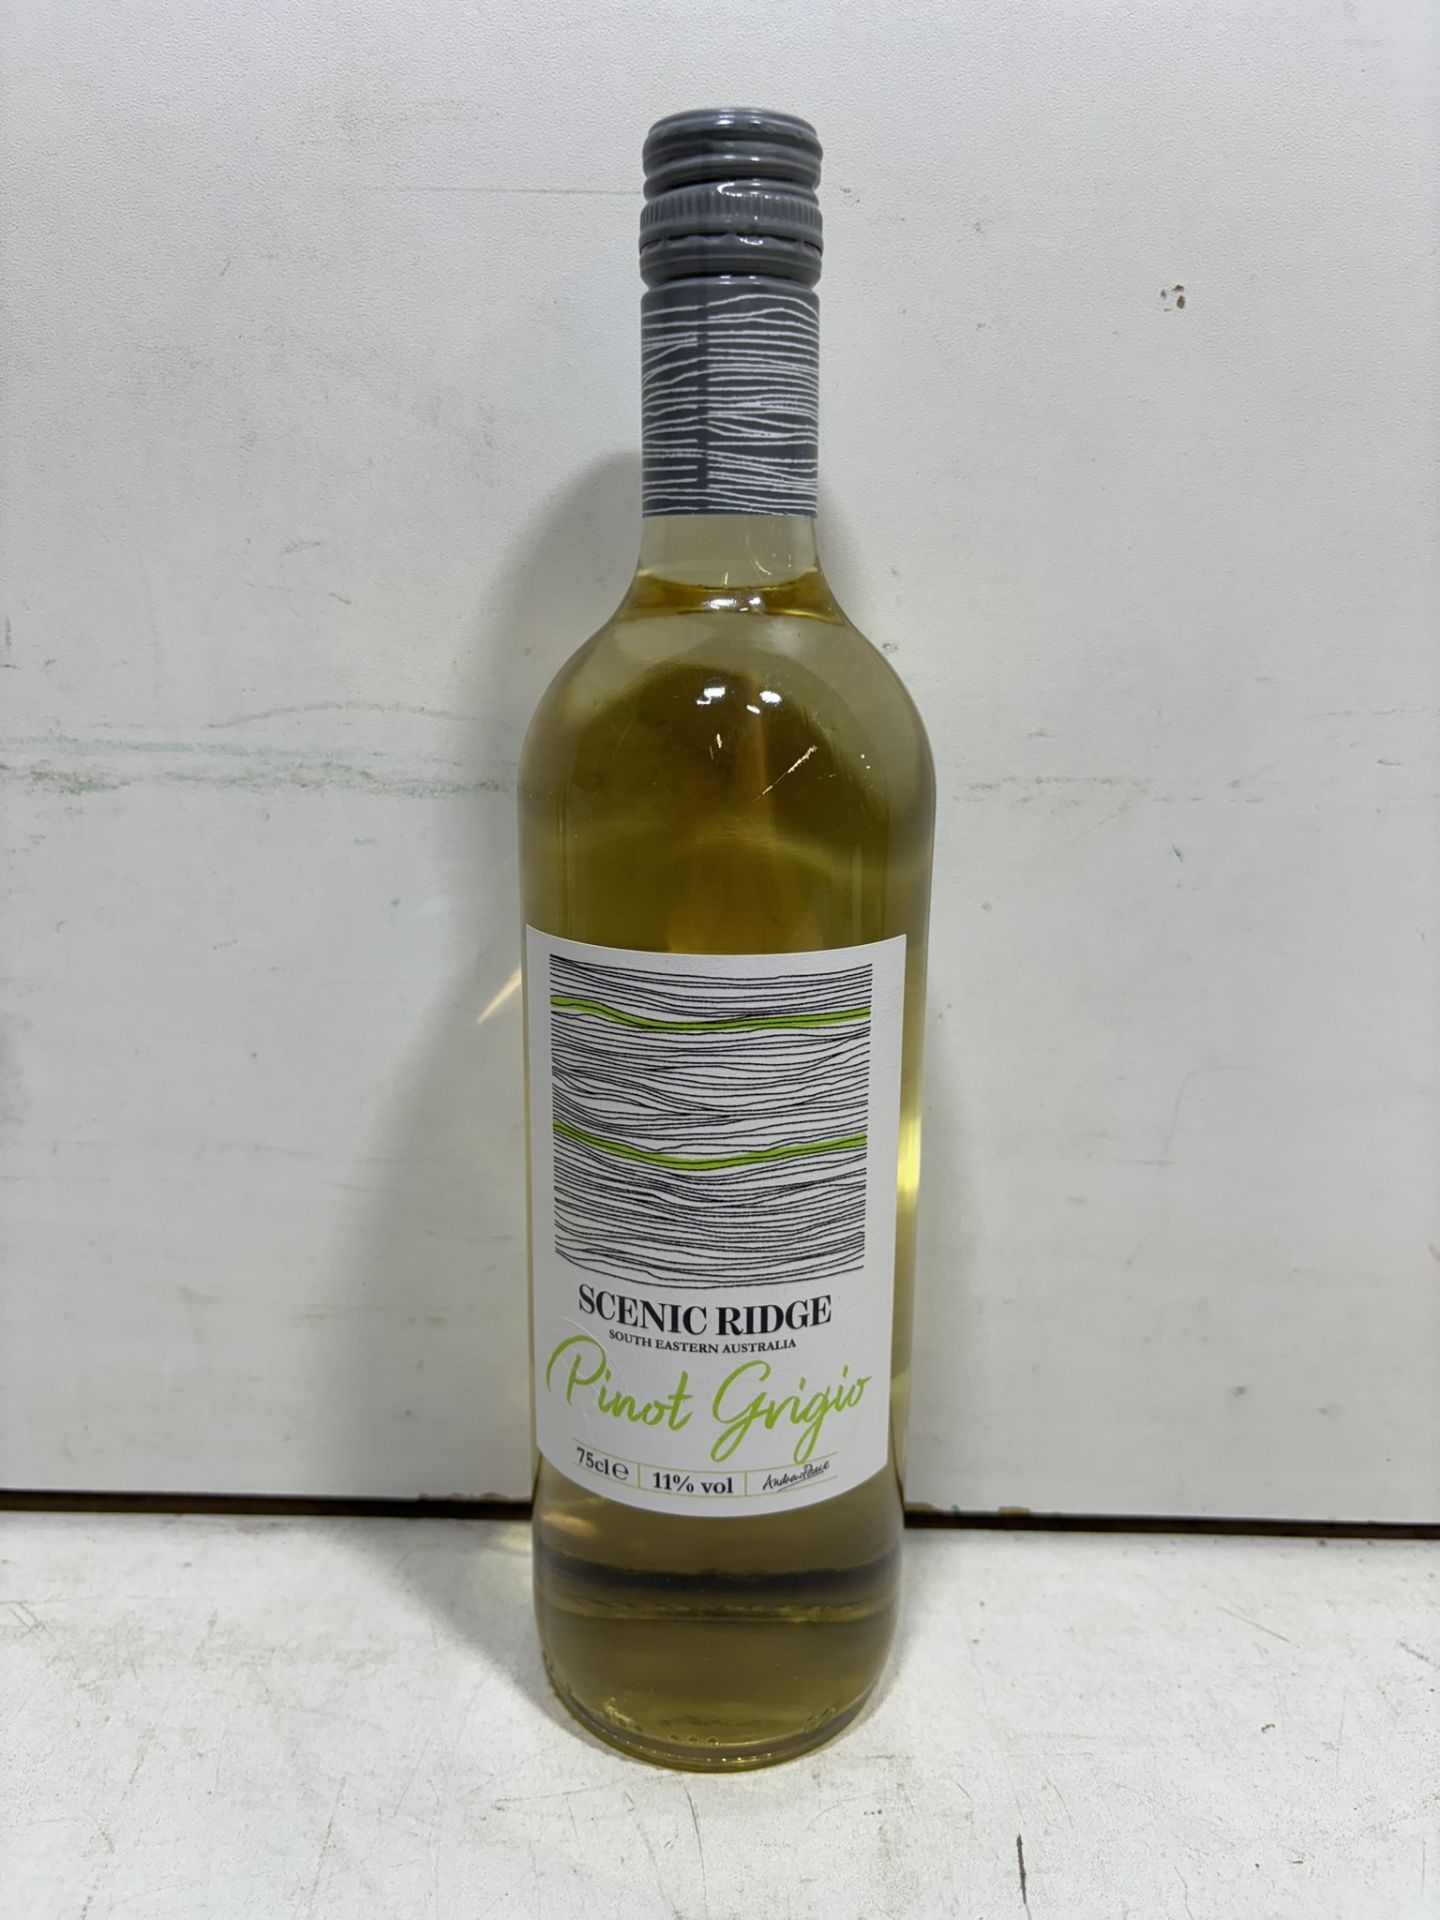 7 X Bottles Of Scenic Ridge Chardonnay / Pinot Grigio - See Description - Image 5 of 7